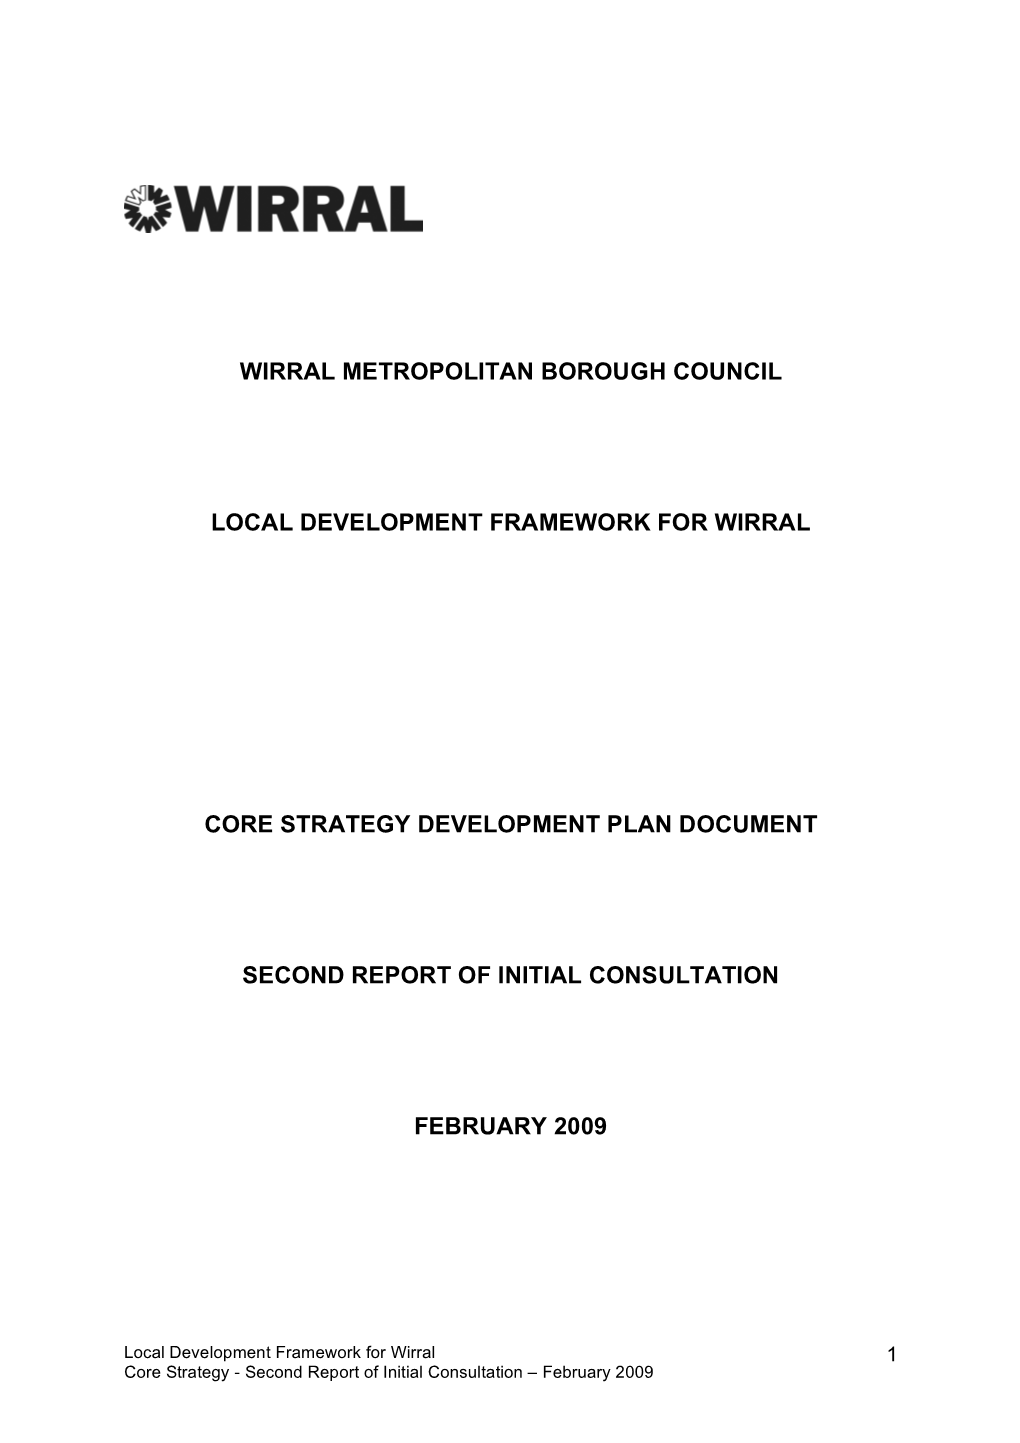 Second Report of Initial Consultation